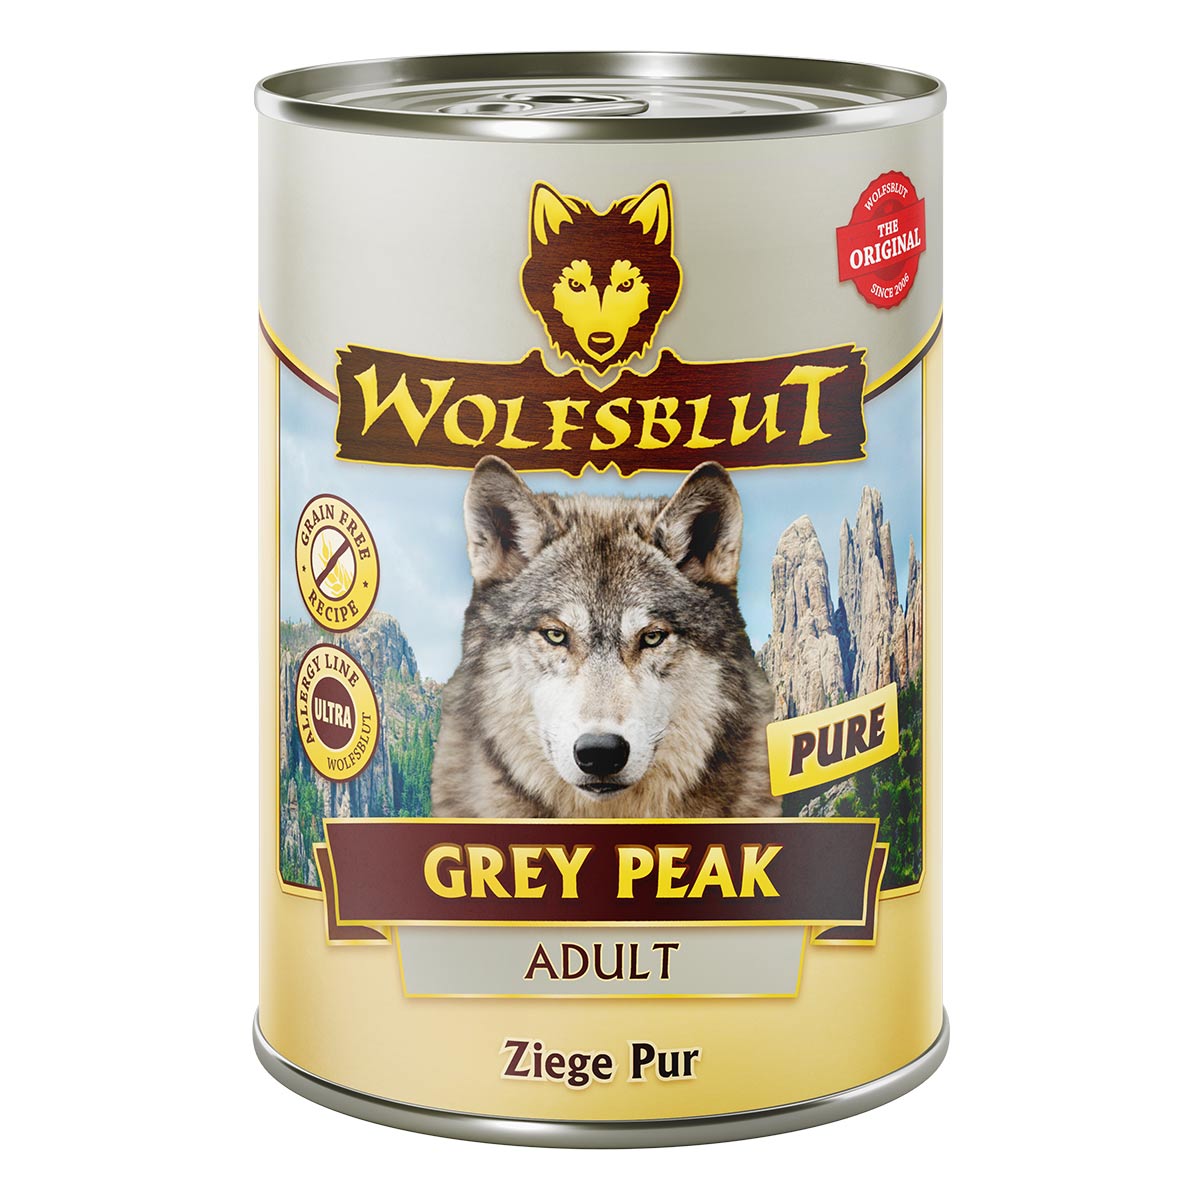 Wolfsblut Grey Peak pure